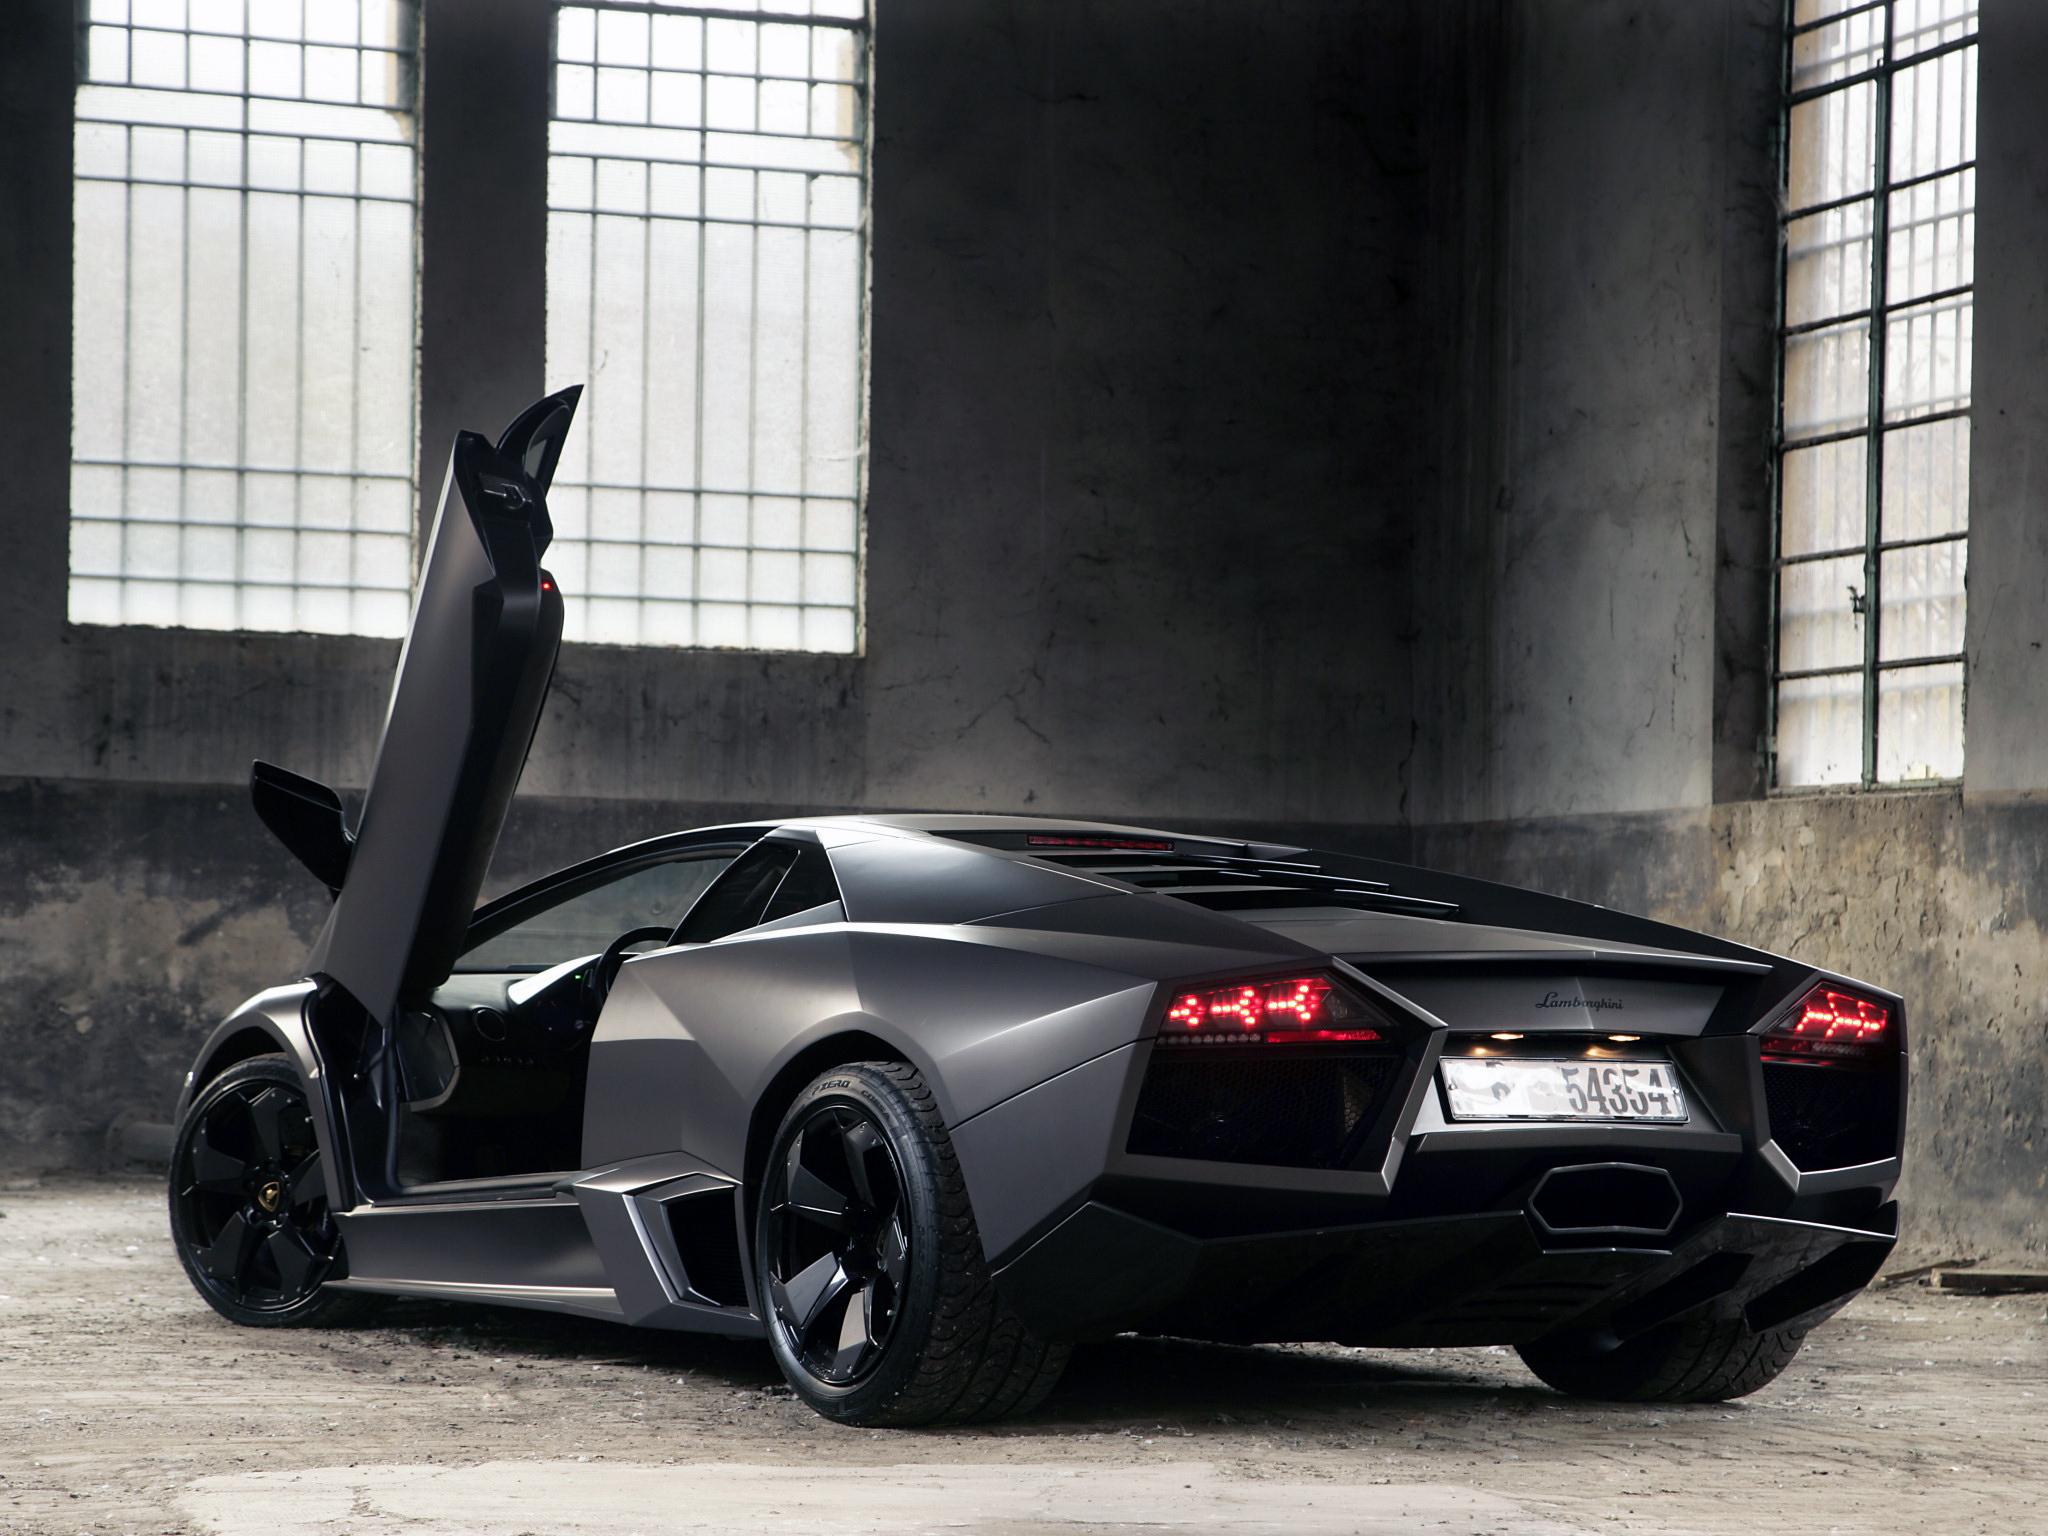 Geiles Hintergrundbild 2048x1536. Foto Lamborghini automobil